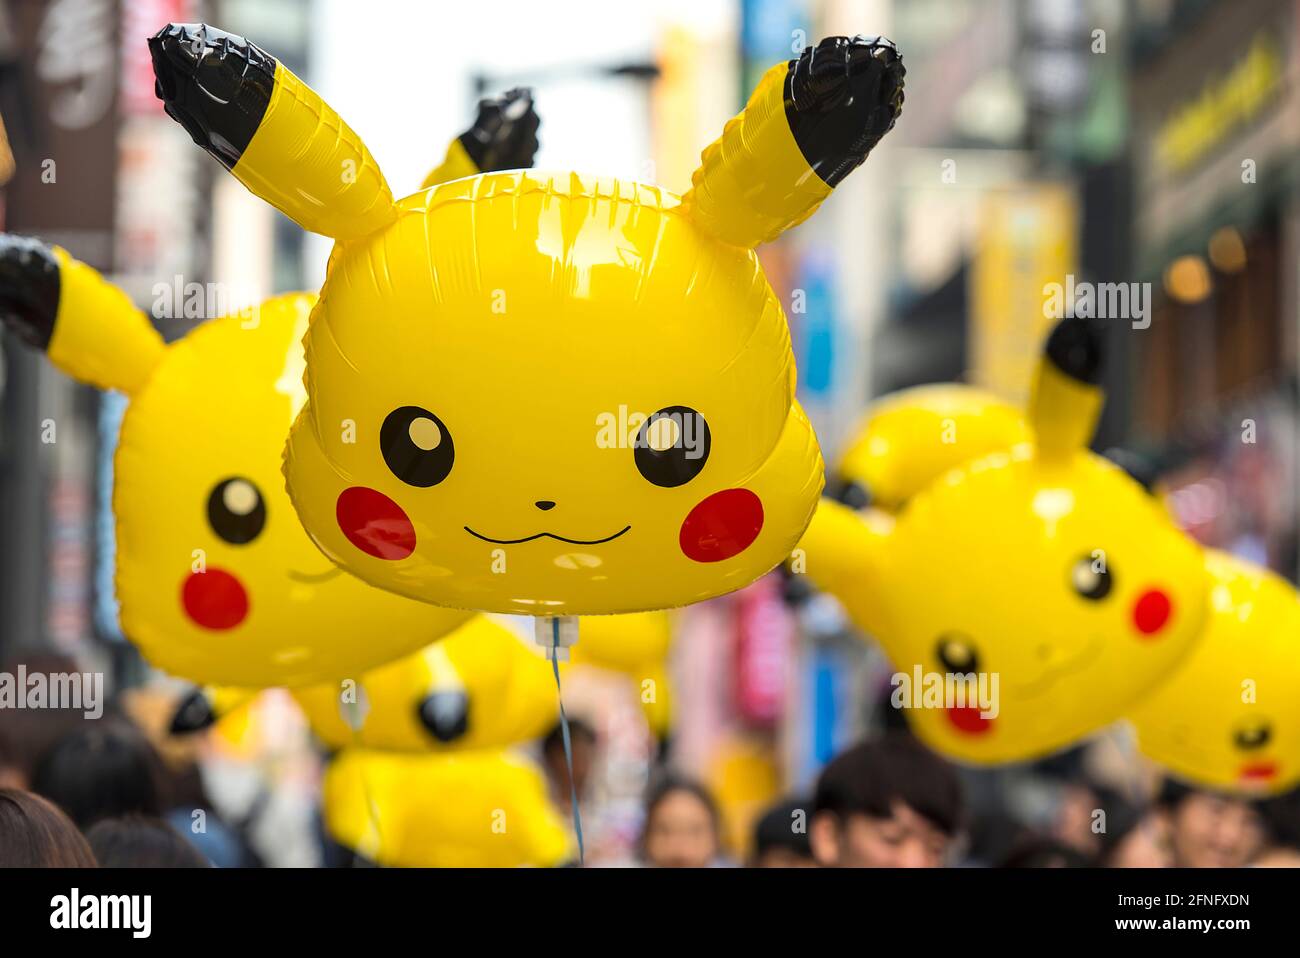 SEOUL - SEPT 24: A big balloon - Pikachu figure from Pokemon anime in Seoul on September 24. 2016 in South Korea Stock Photo